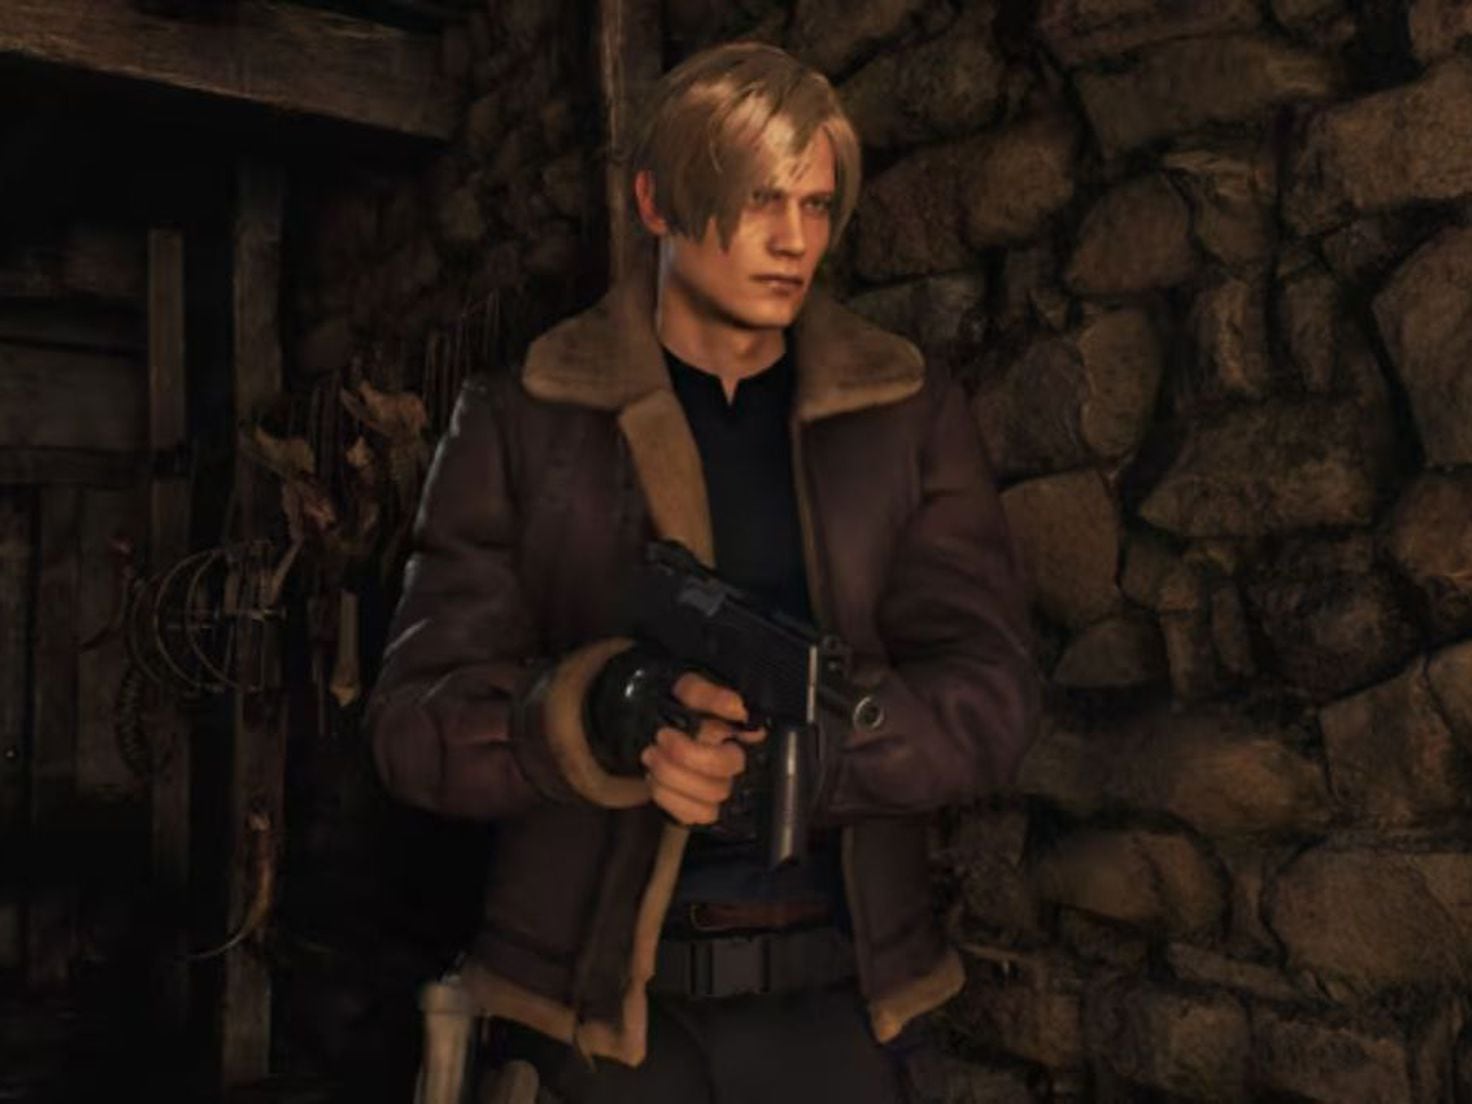  Resident Evil 4 - Xbox One Standard Edition : Capcom U S A Inc:  Video Games